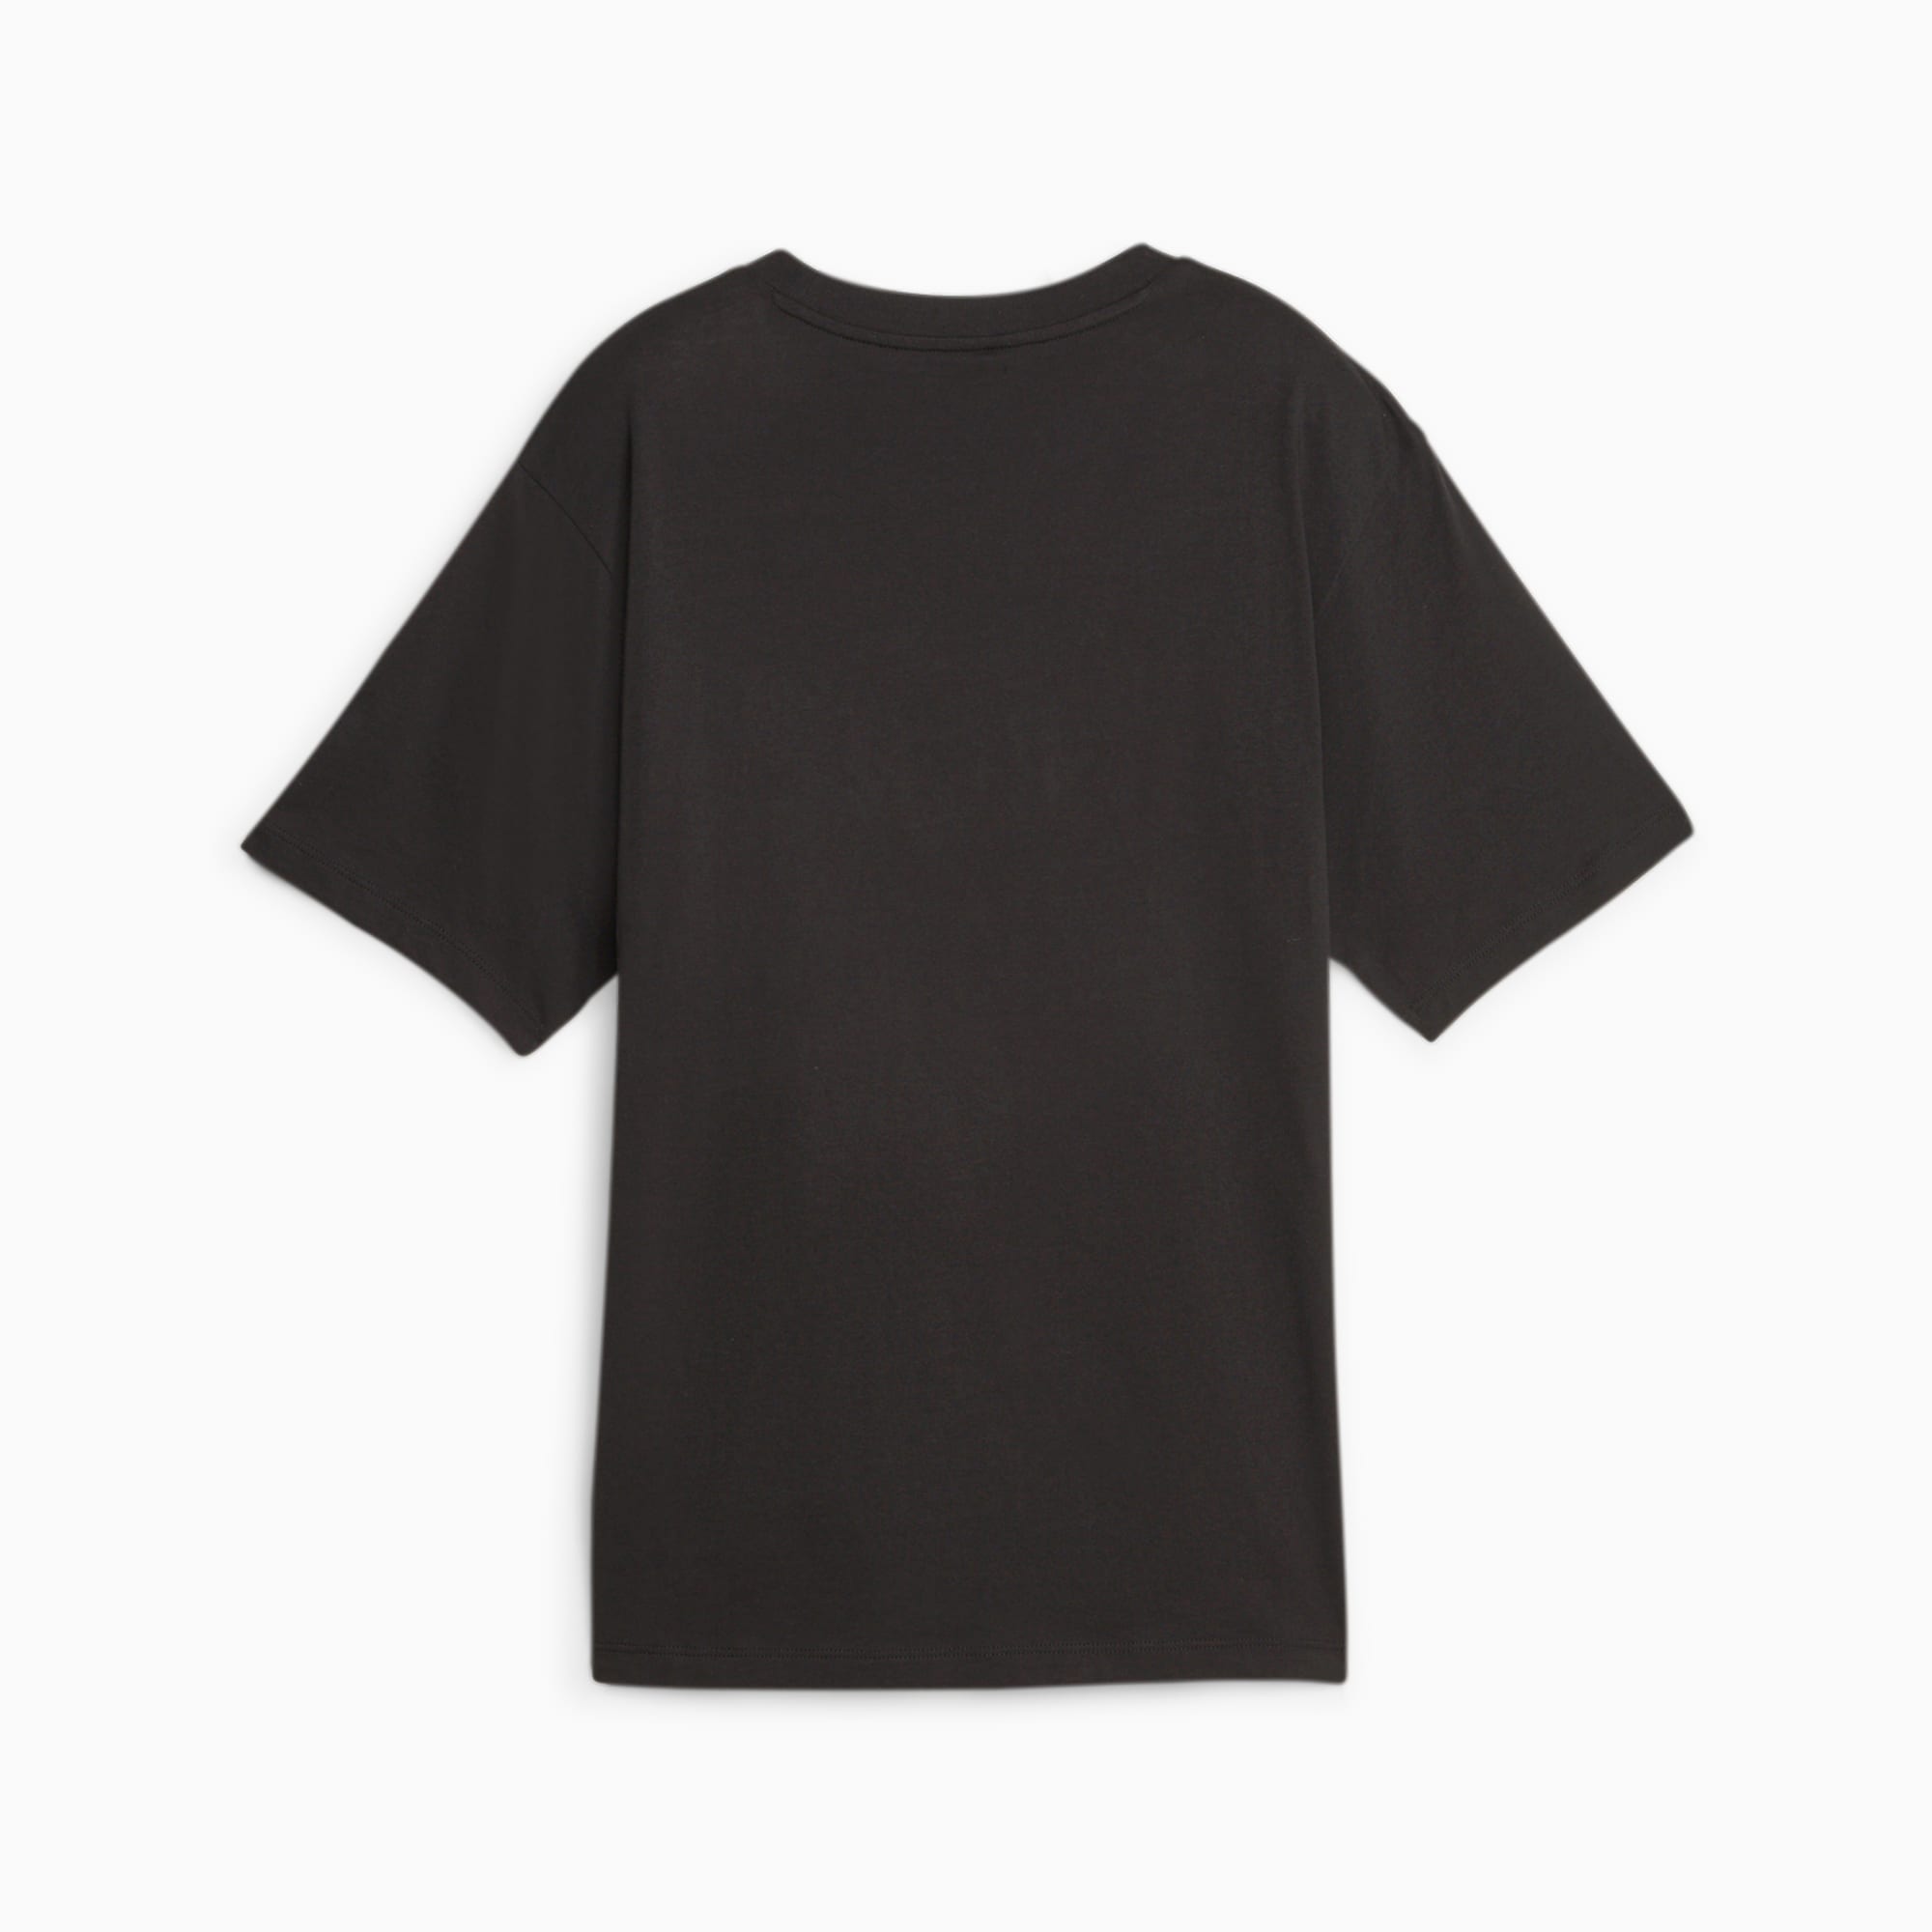 PUMA Ess+ Marbleized Women's Relaxed T-Shirt, Black, Size XXS, Clothing